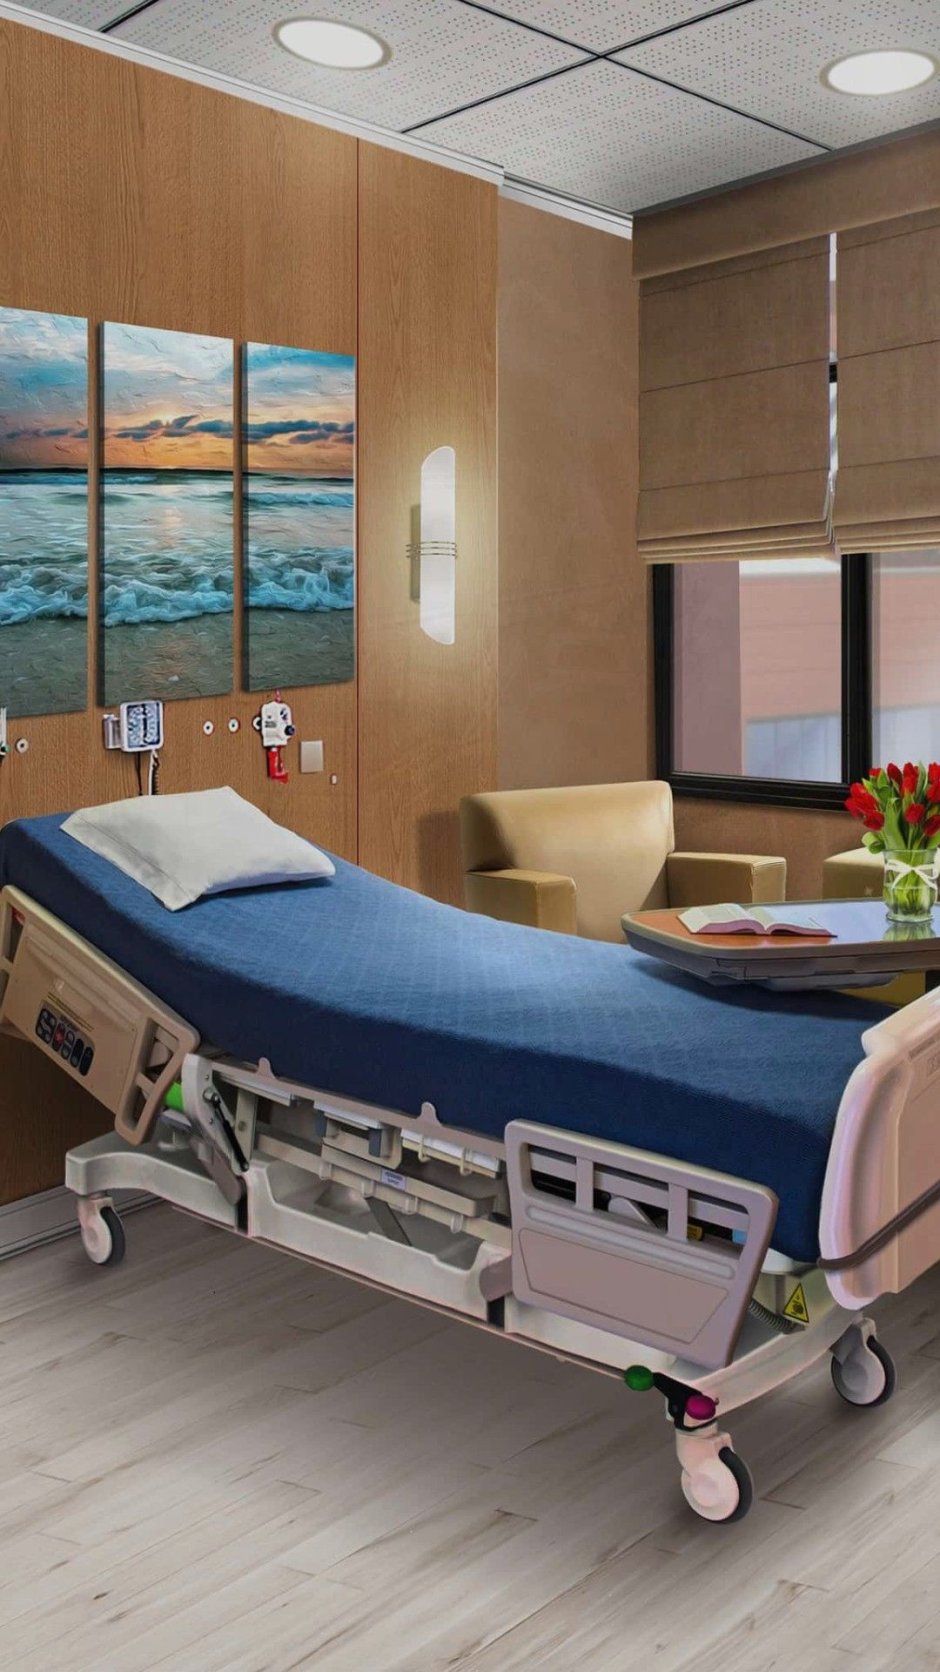 Hospital Room Bed Desk Window View Unreal Highly Rendered Render Stock  Photo by ©elesaro 643852324